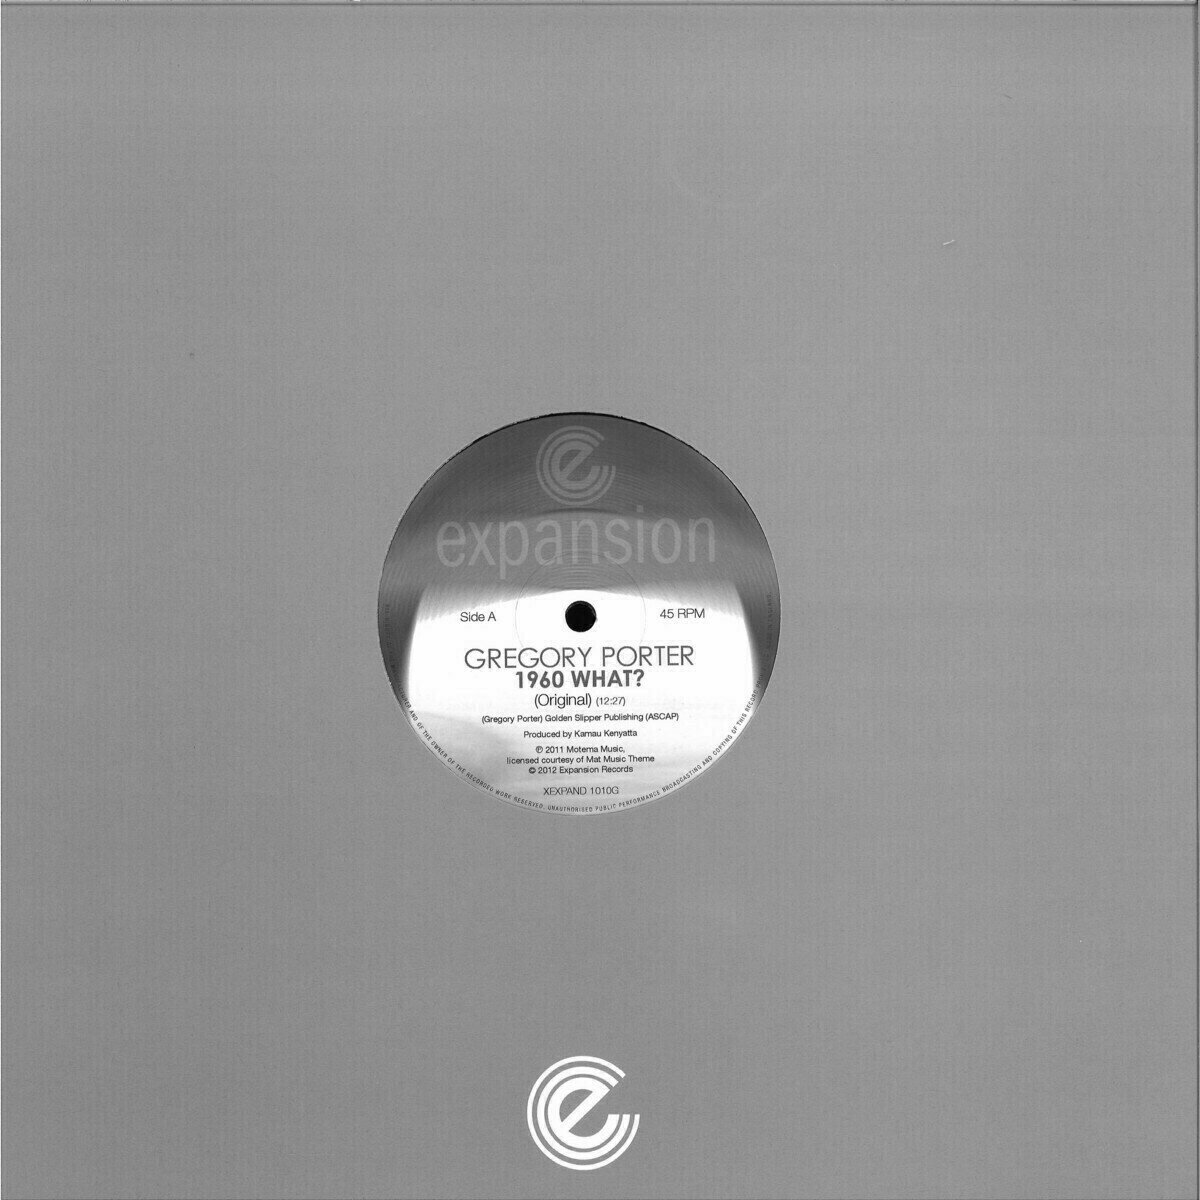 Płyta winylowa Gregory Porter - 1960 What? (Original Mix) (12" Vinyl)